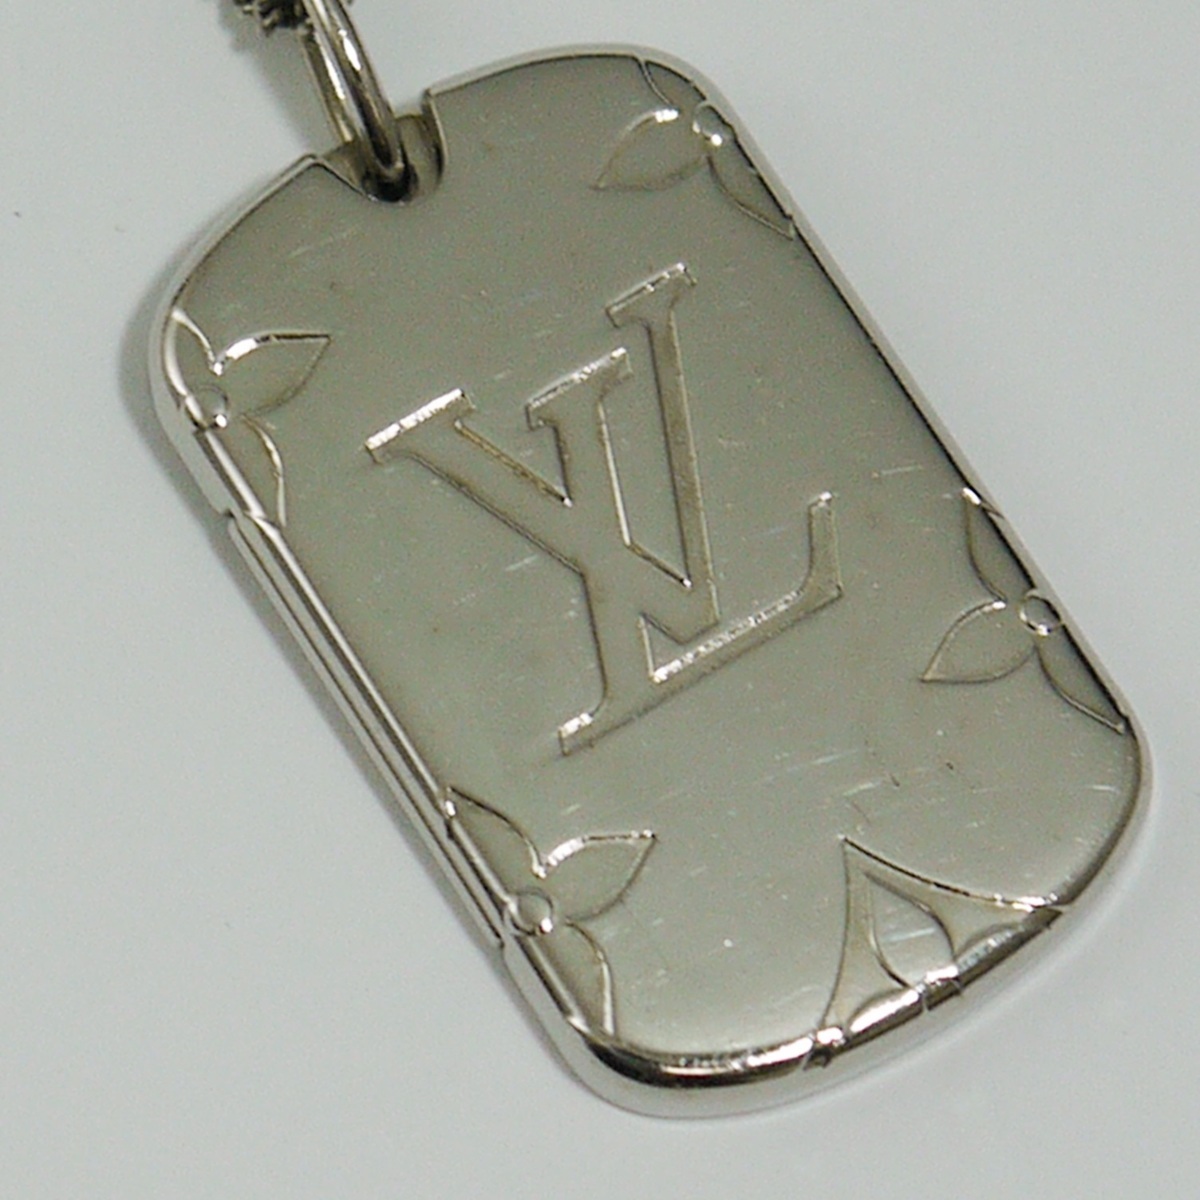 Louis Vuitton Monogram locket necklace (M62484)